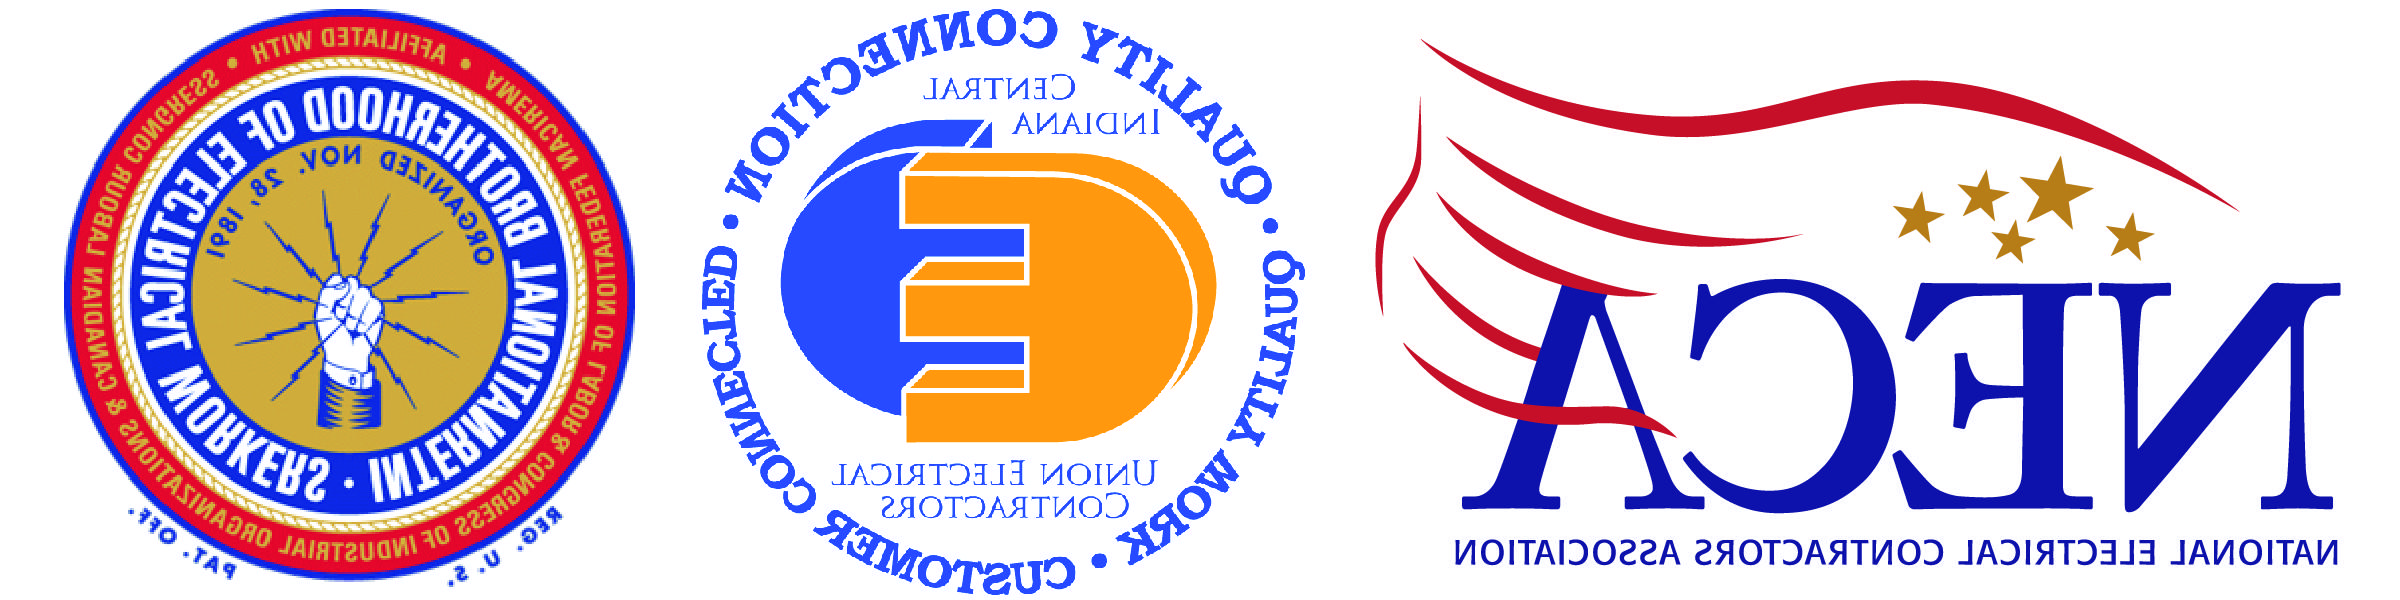 IBEW, NECA, QC Final Combined Logo-01.jpg